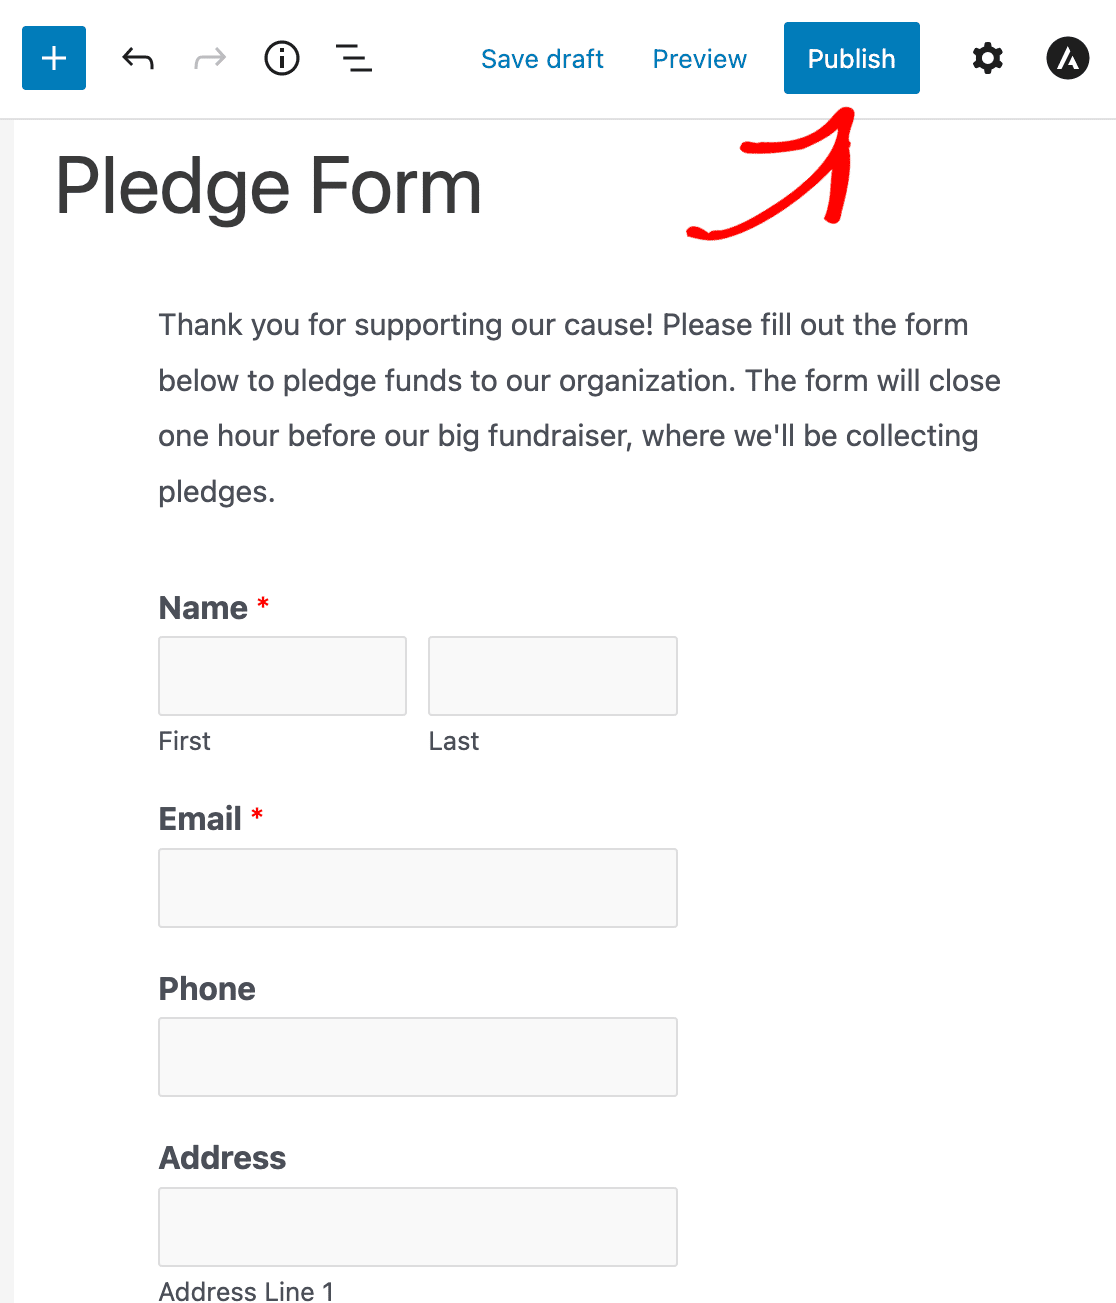 Publishing your pledge form